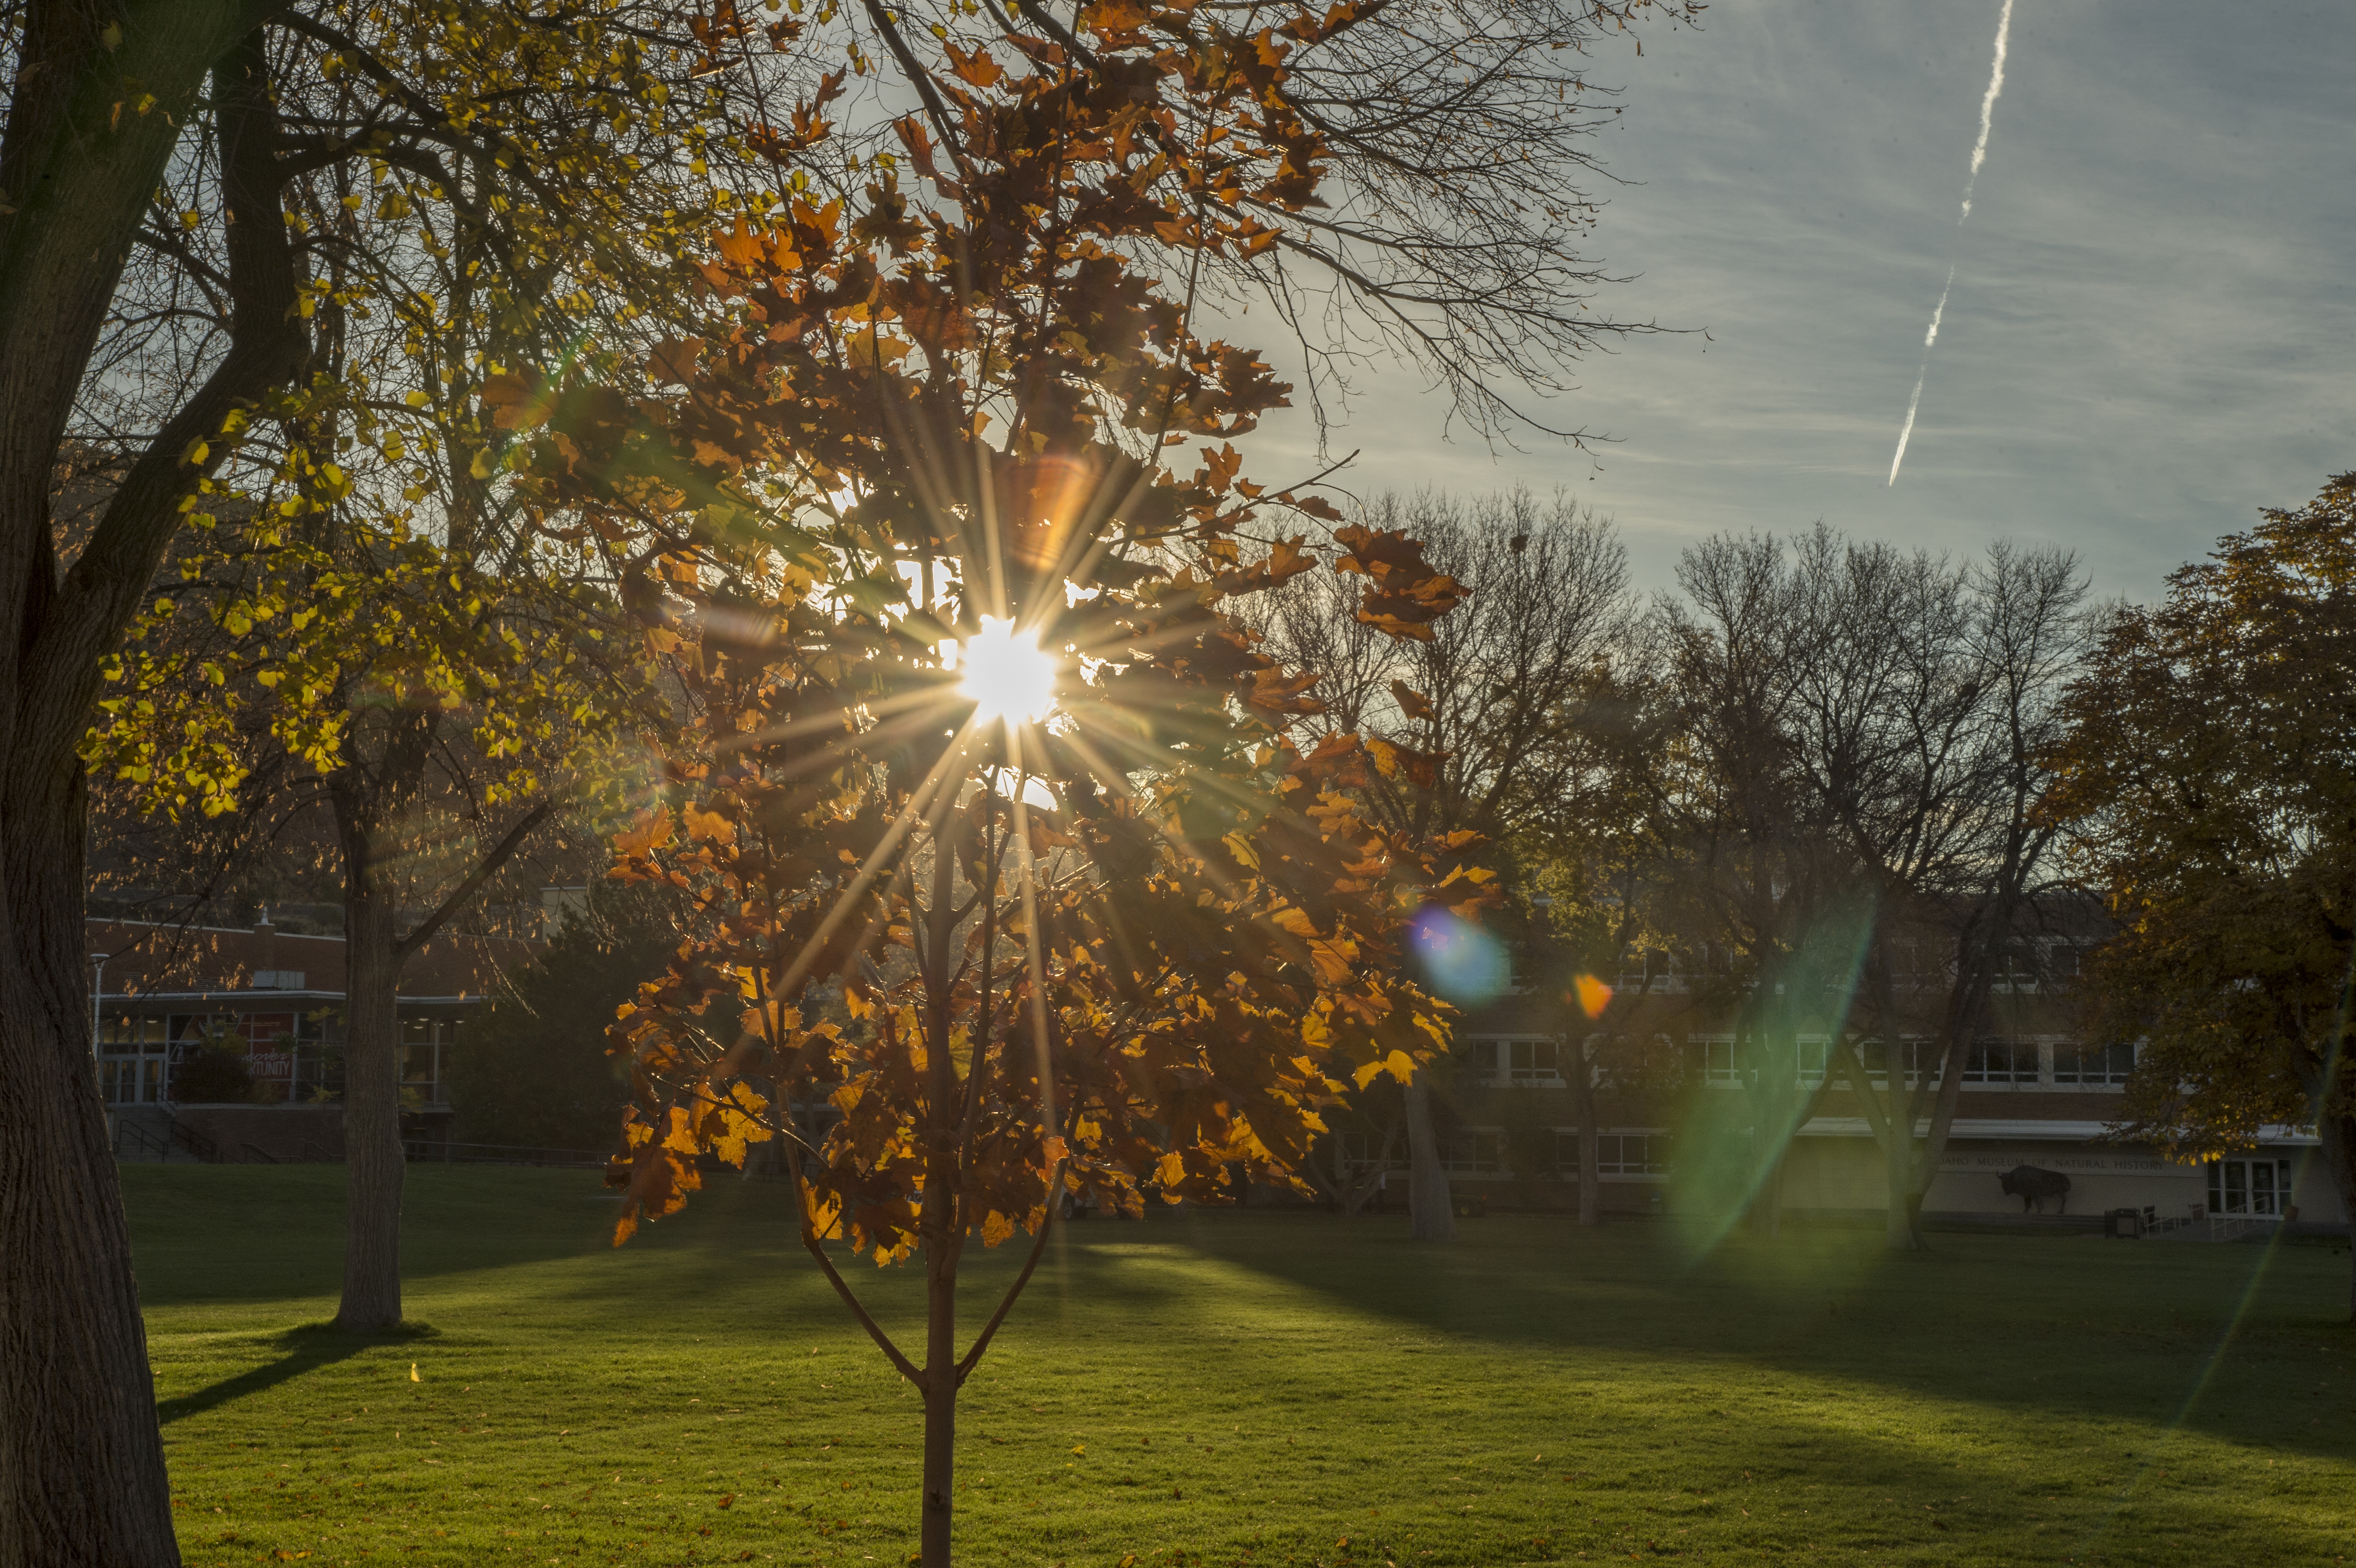 Sunburst through the fall tree on campus